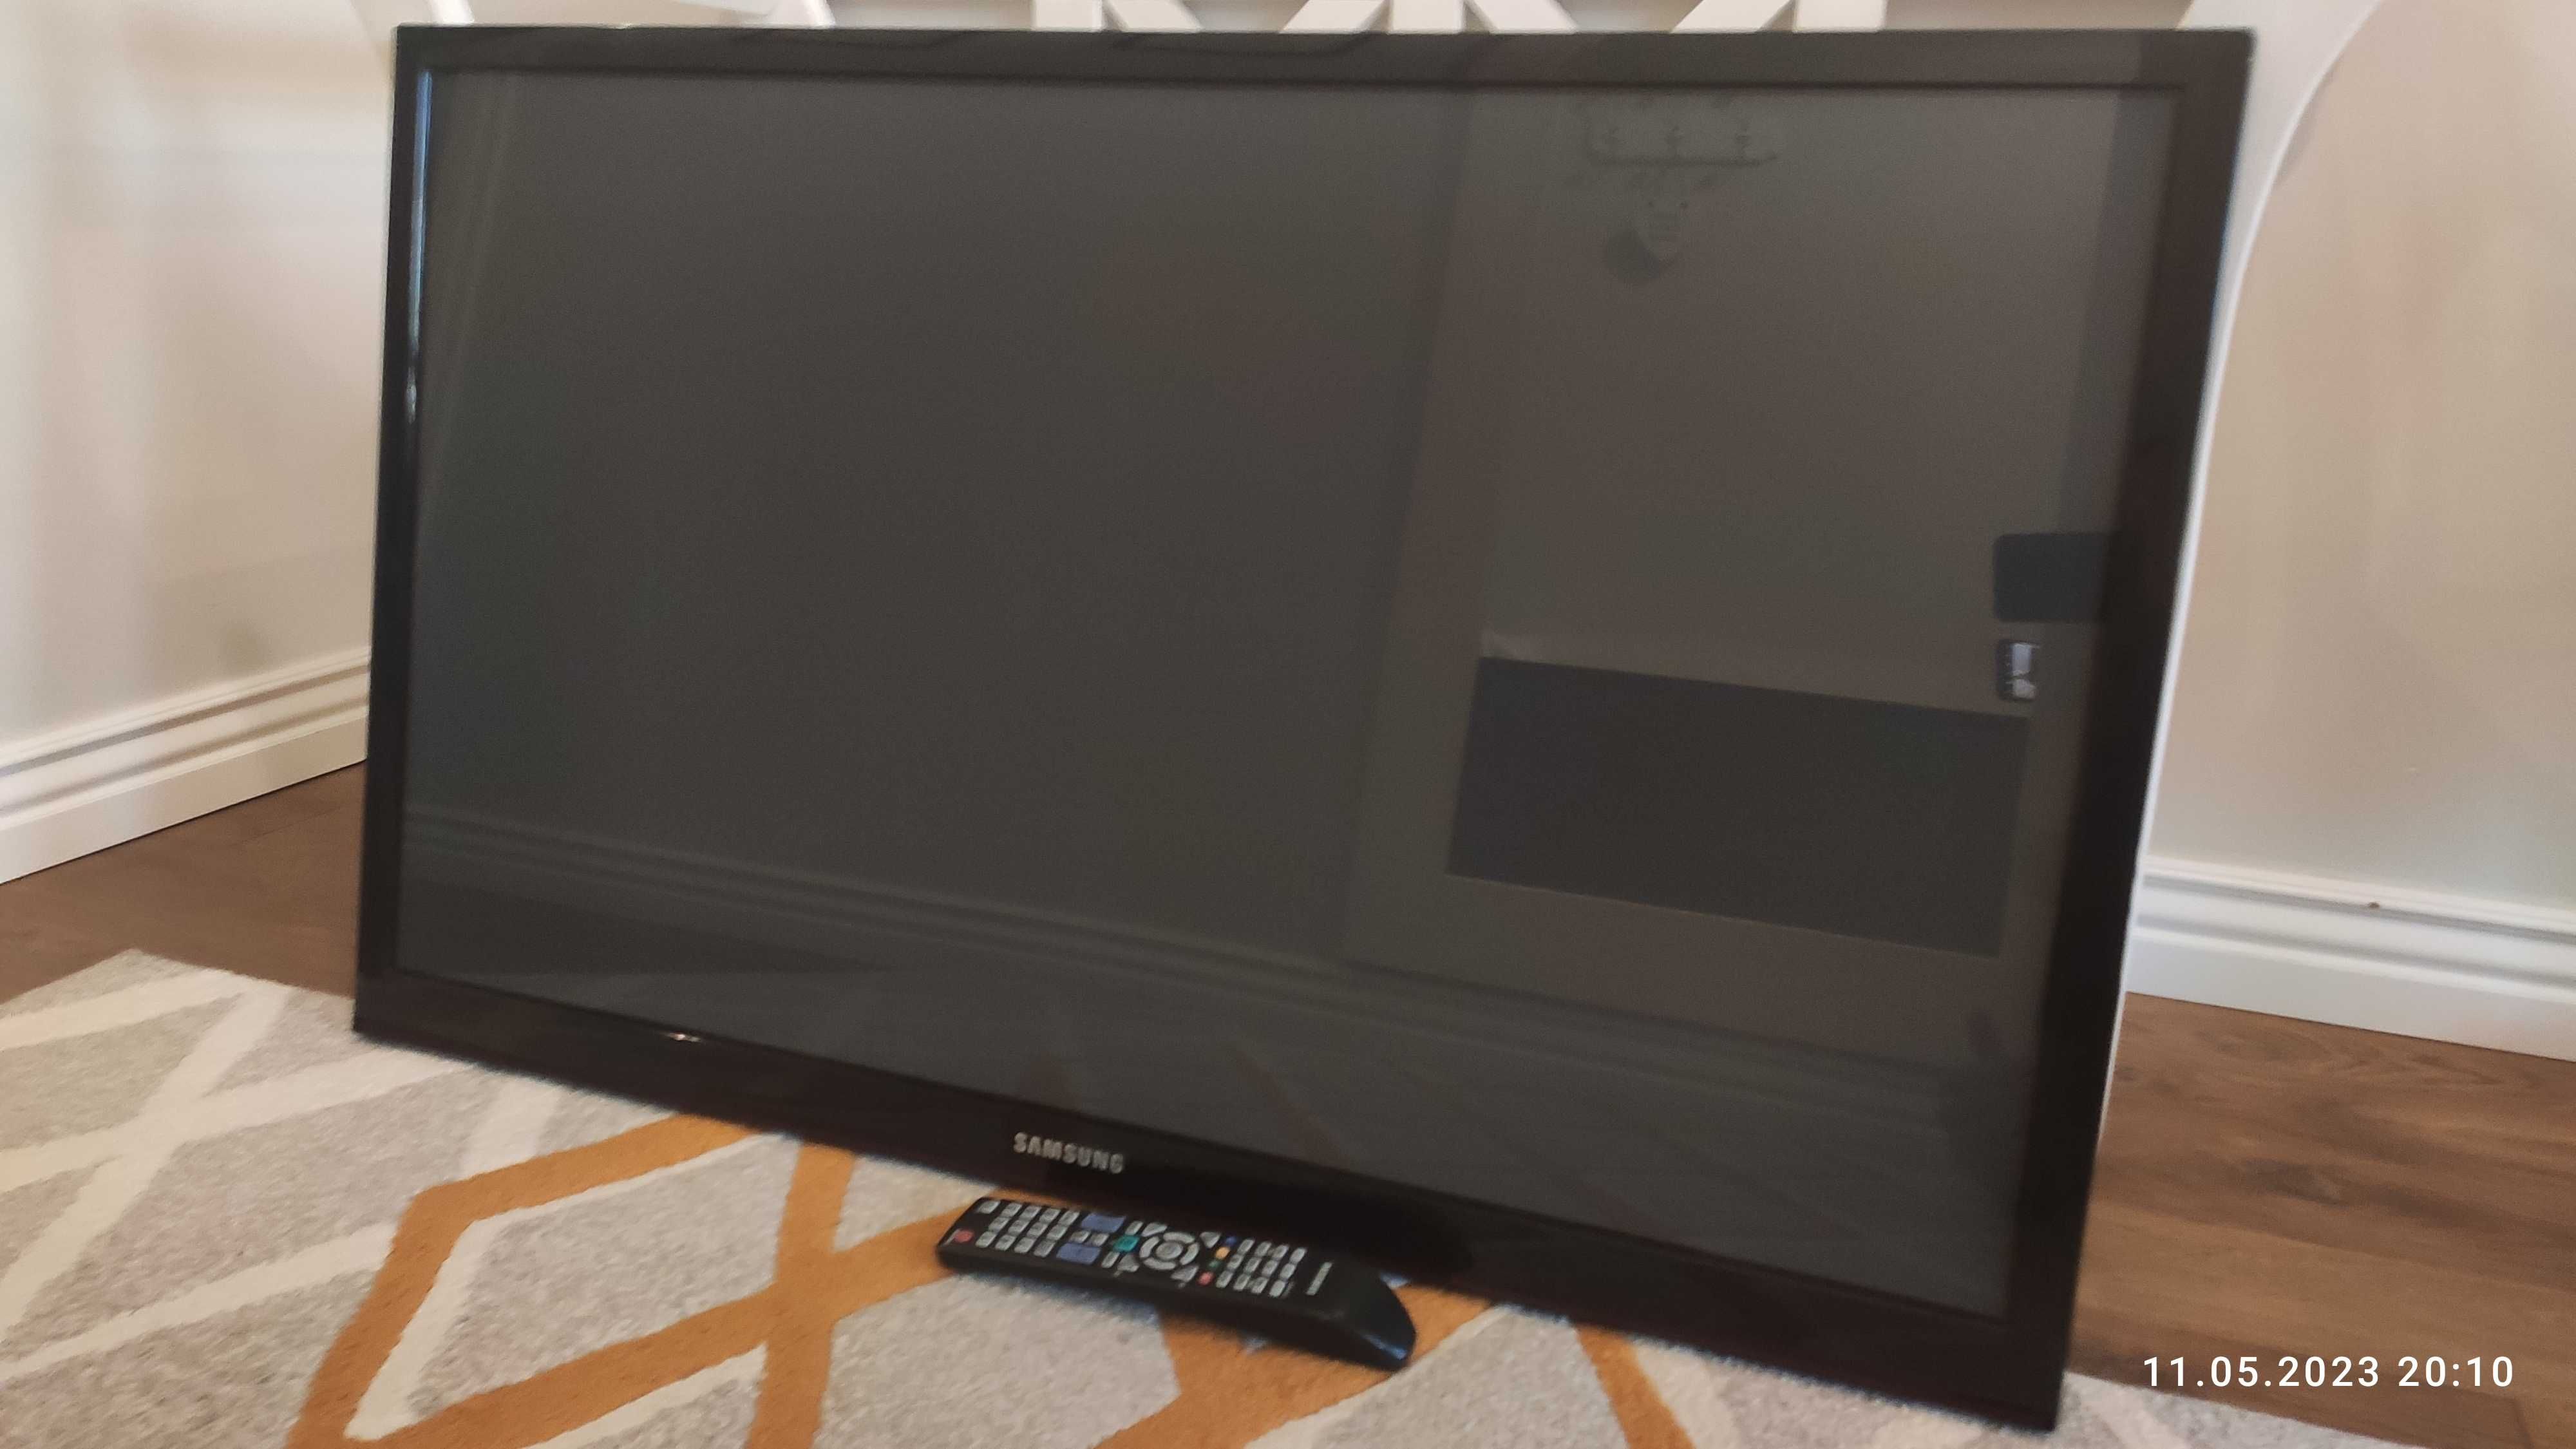 TV Samsung PS43D490A1W - plazma